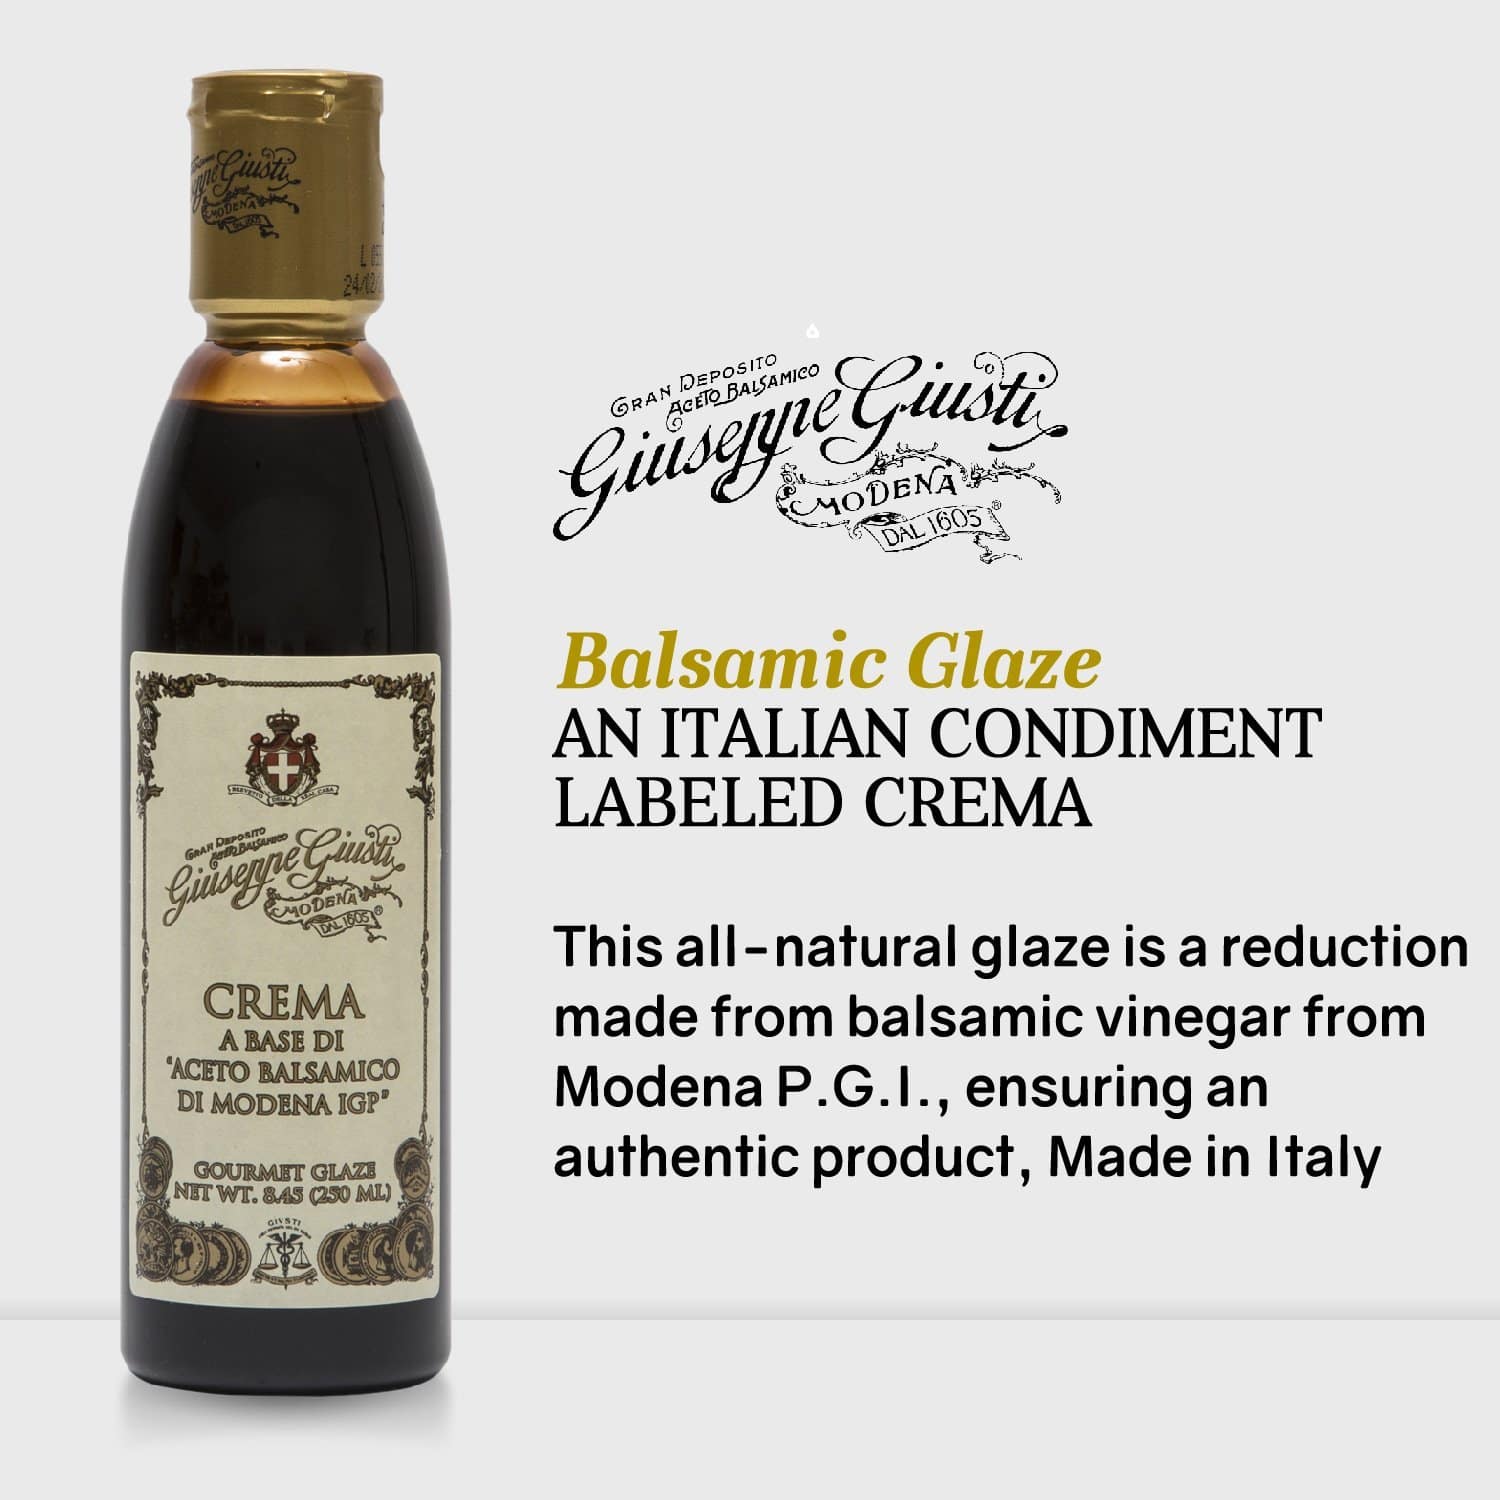 Buy Giusti online Modena Balsamic Vinegar of Gourmet Glaze with